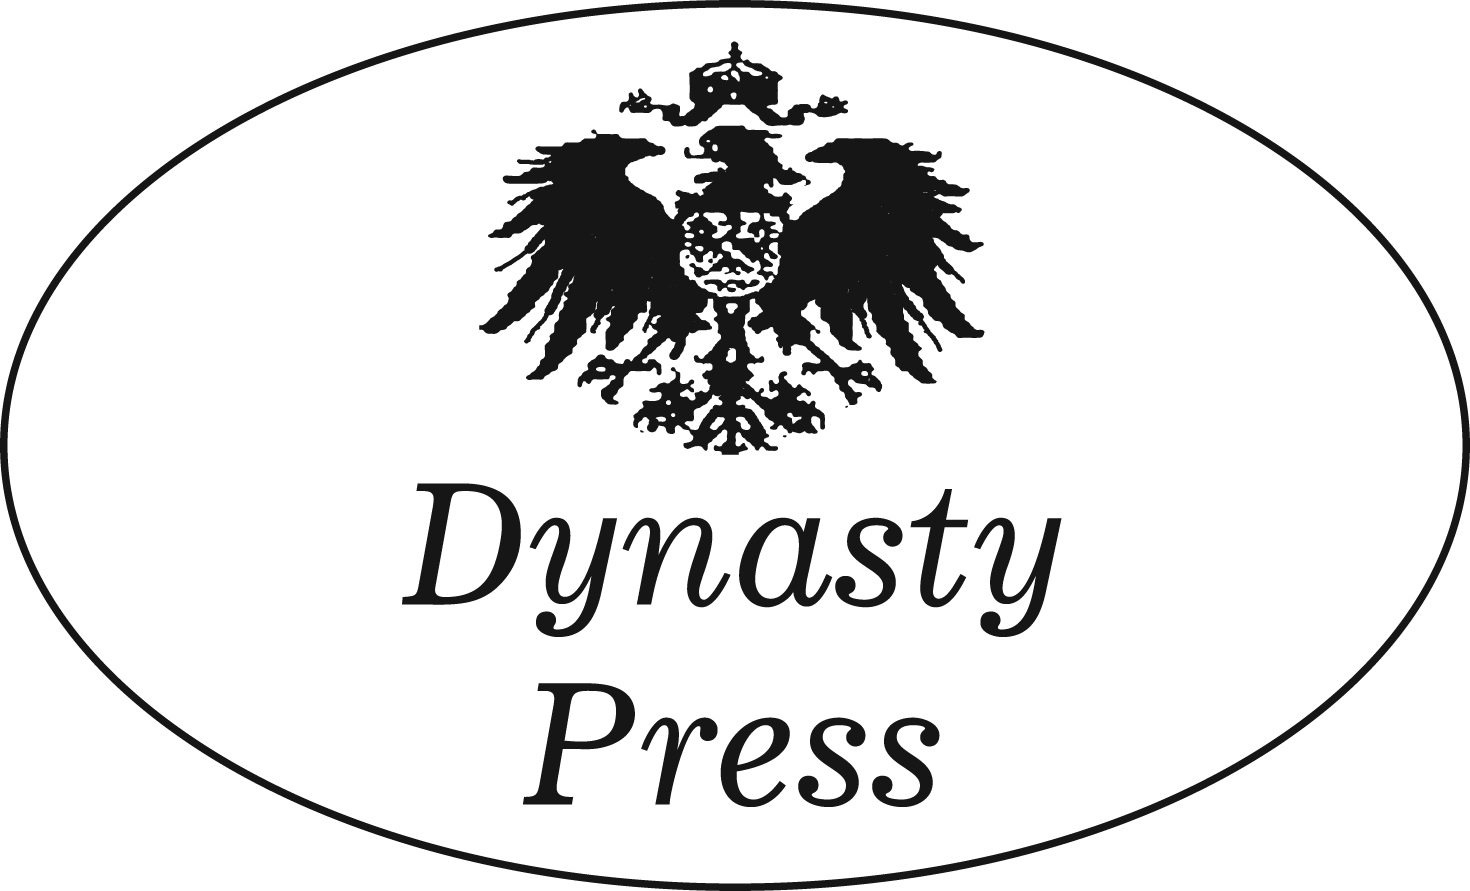 Dynasty Press Logo